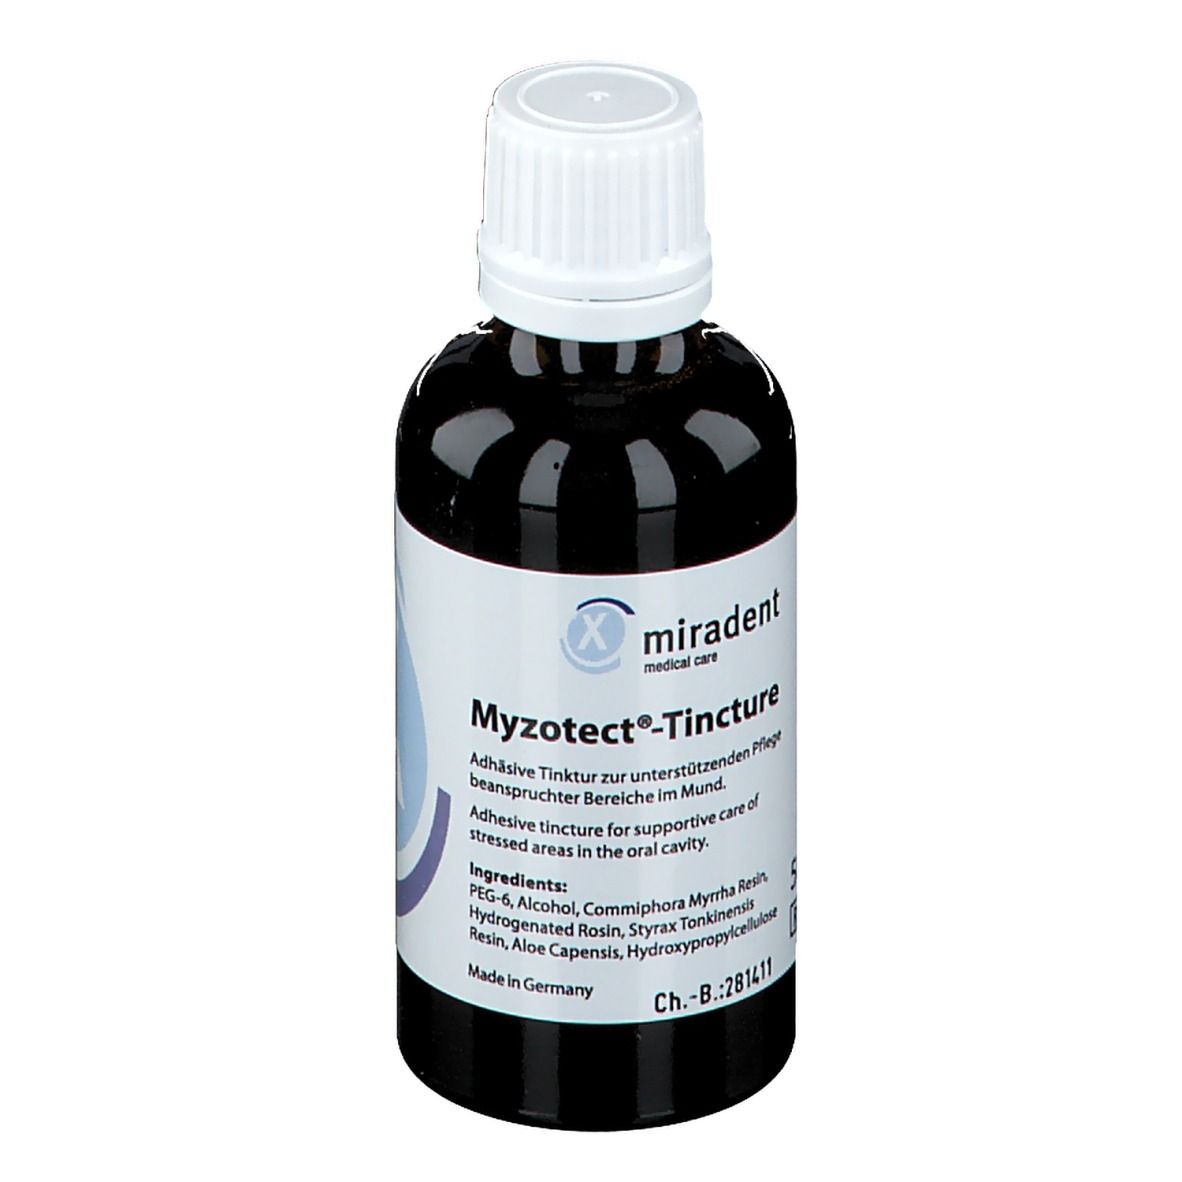 miradent Myzotect ®-Tincture